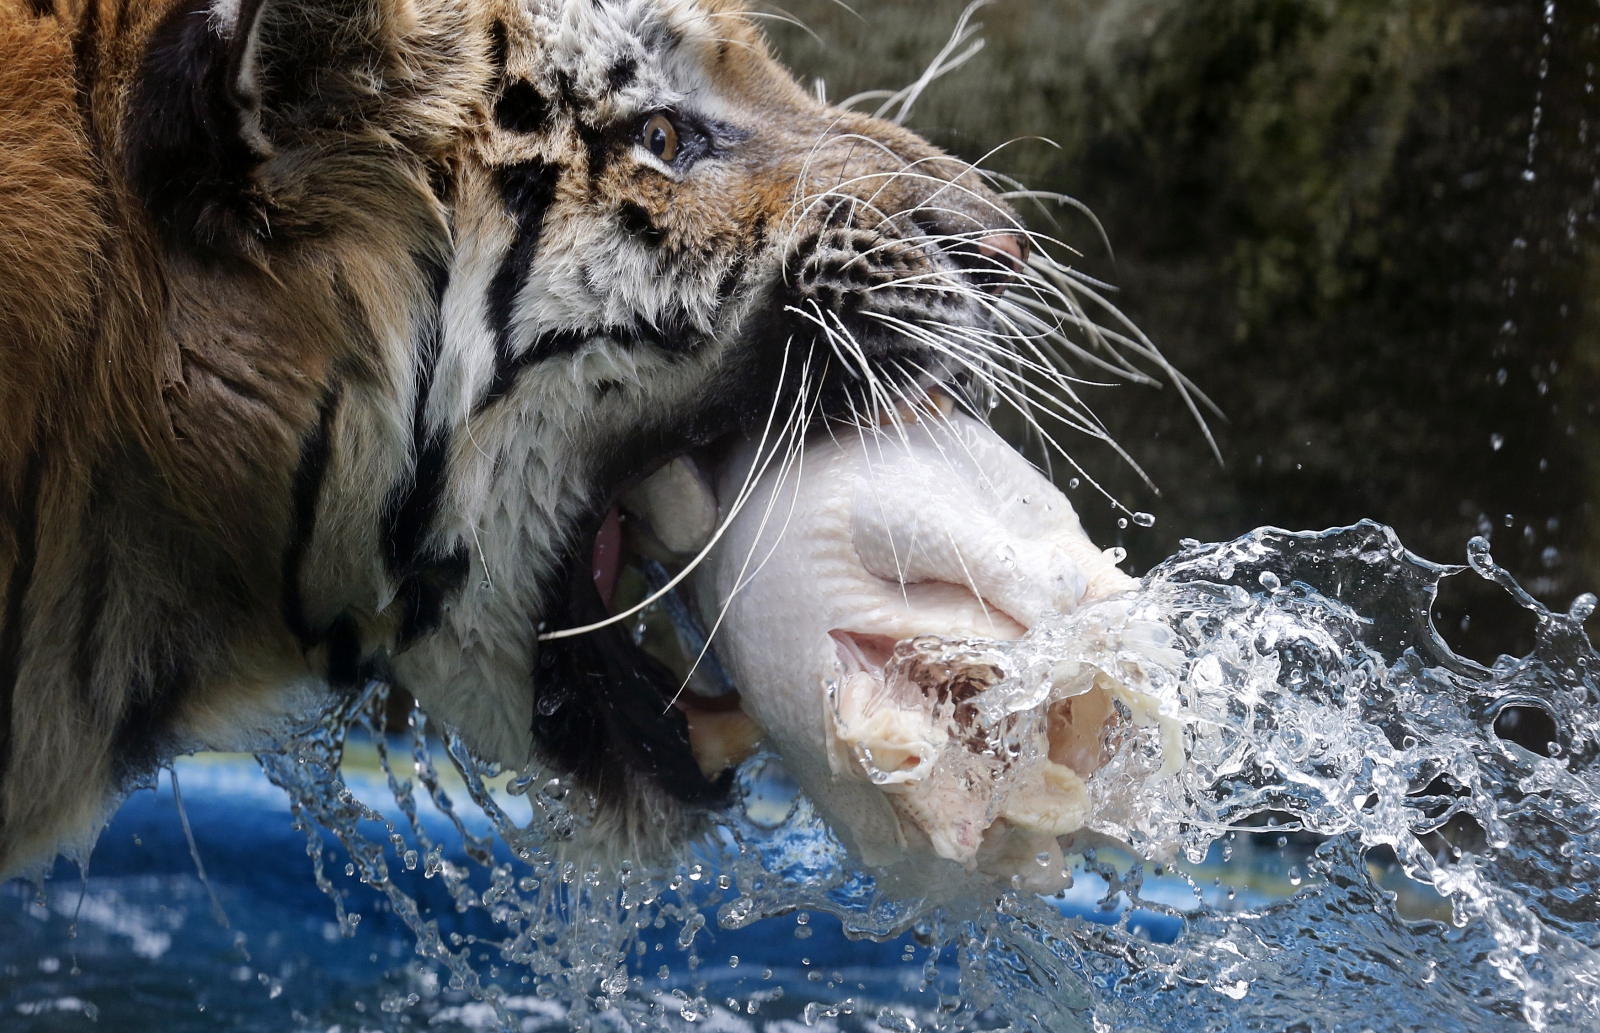 Putin's Siberian tiger caught on camera devouring domestic dog